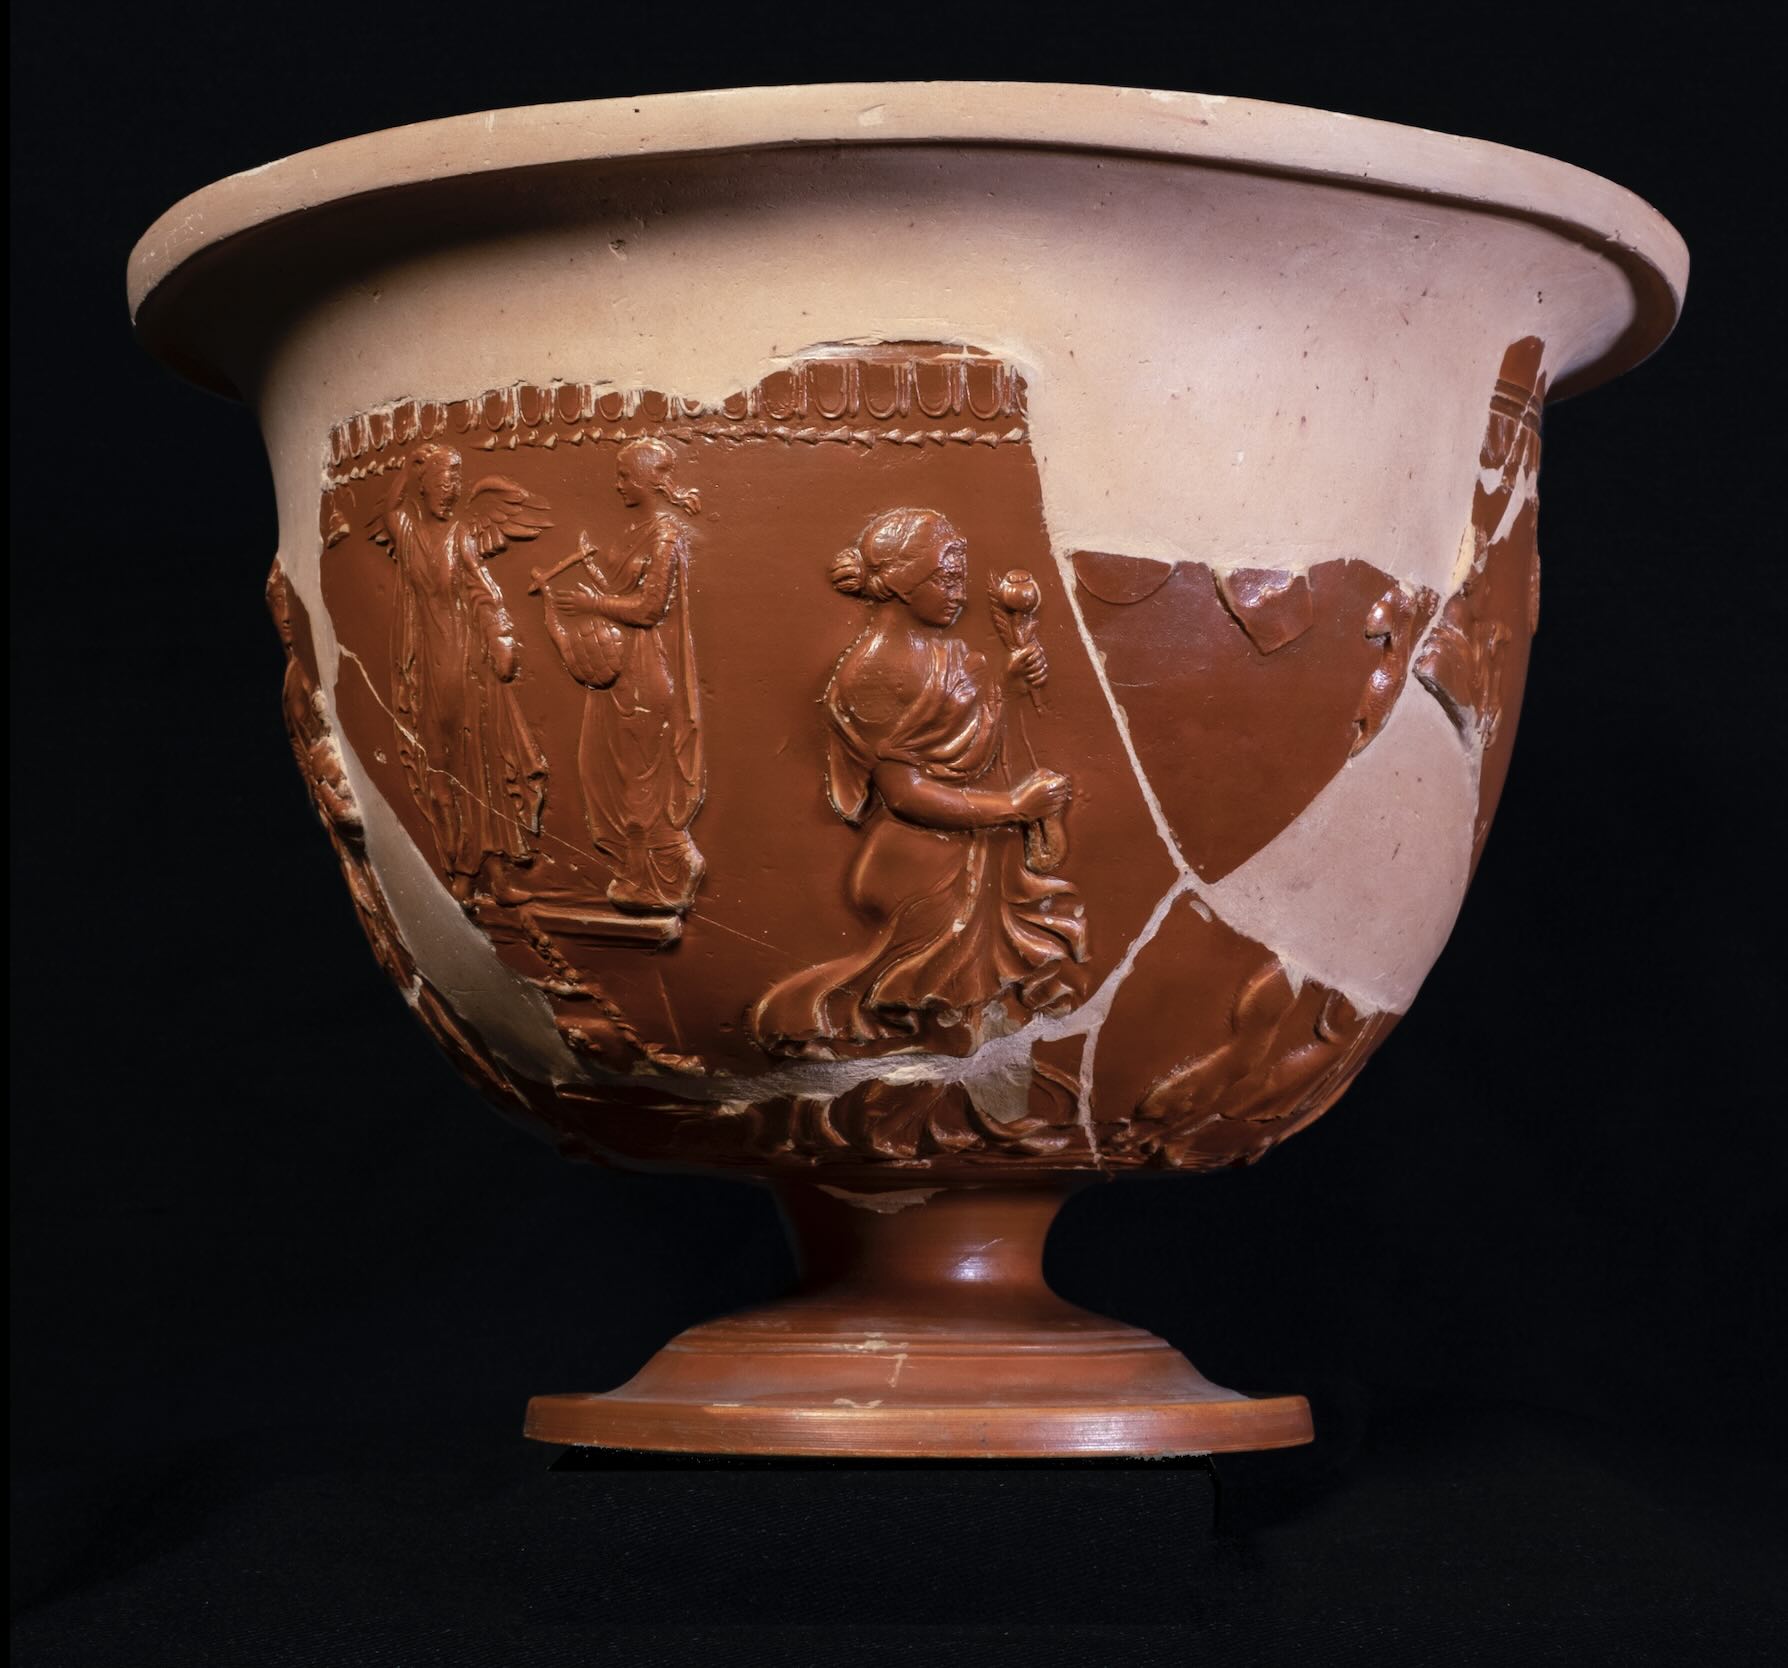 Inaugurazione mostra “I Vasari “vasai” e la produzione ceramica aretina di età antica